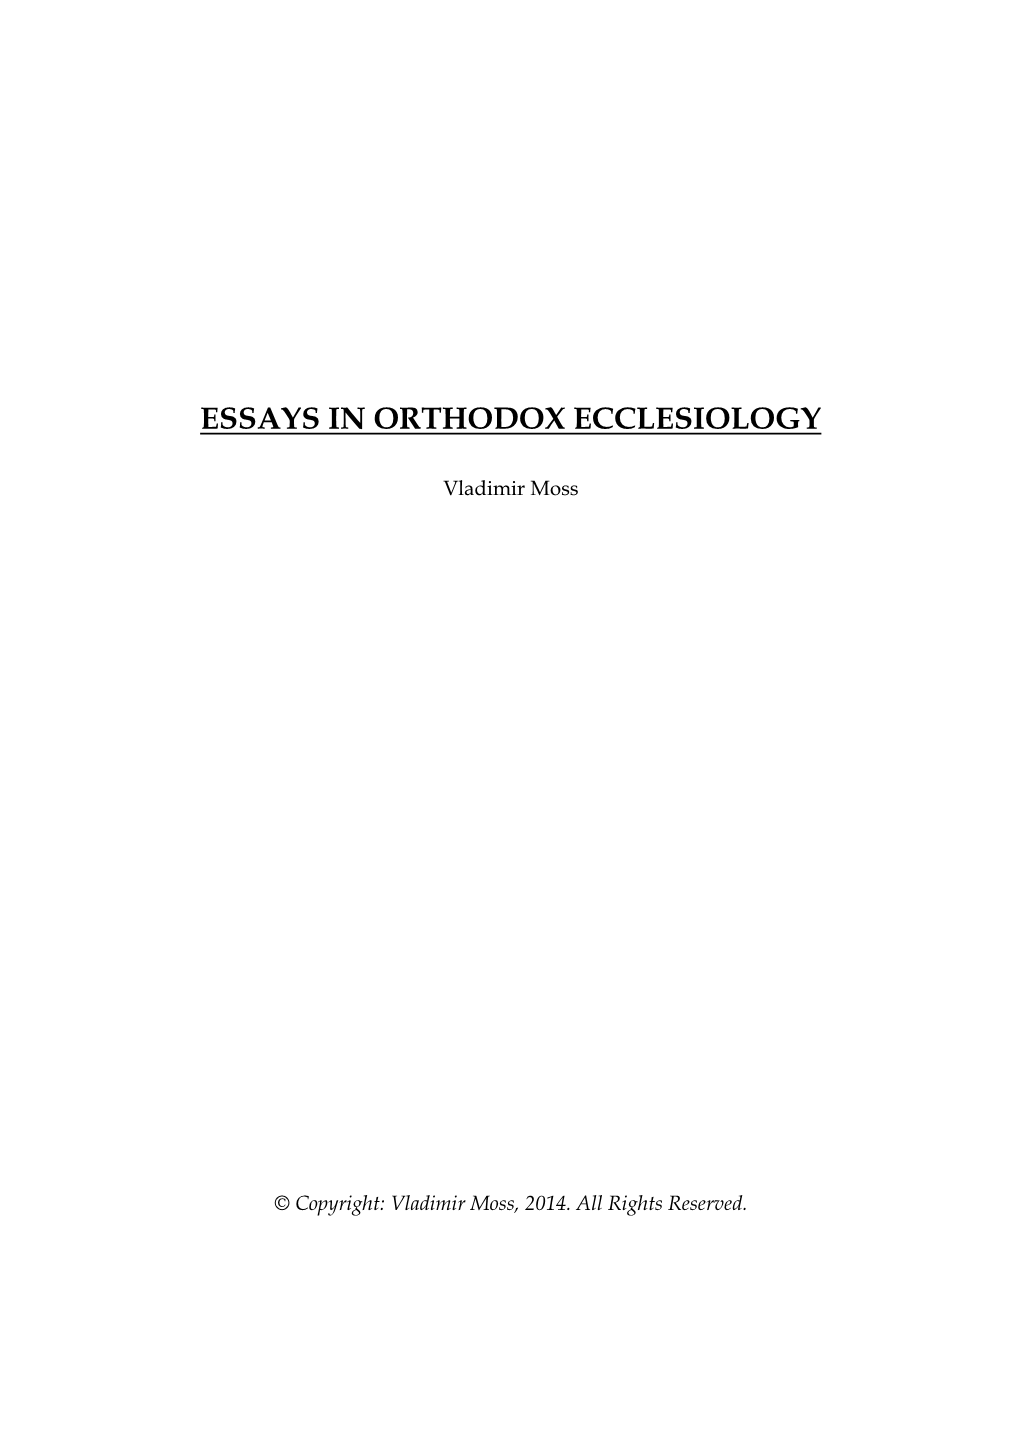 Essays in Orthodox Ecclesiology